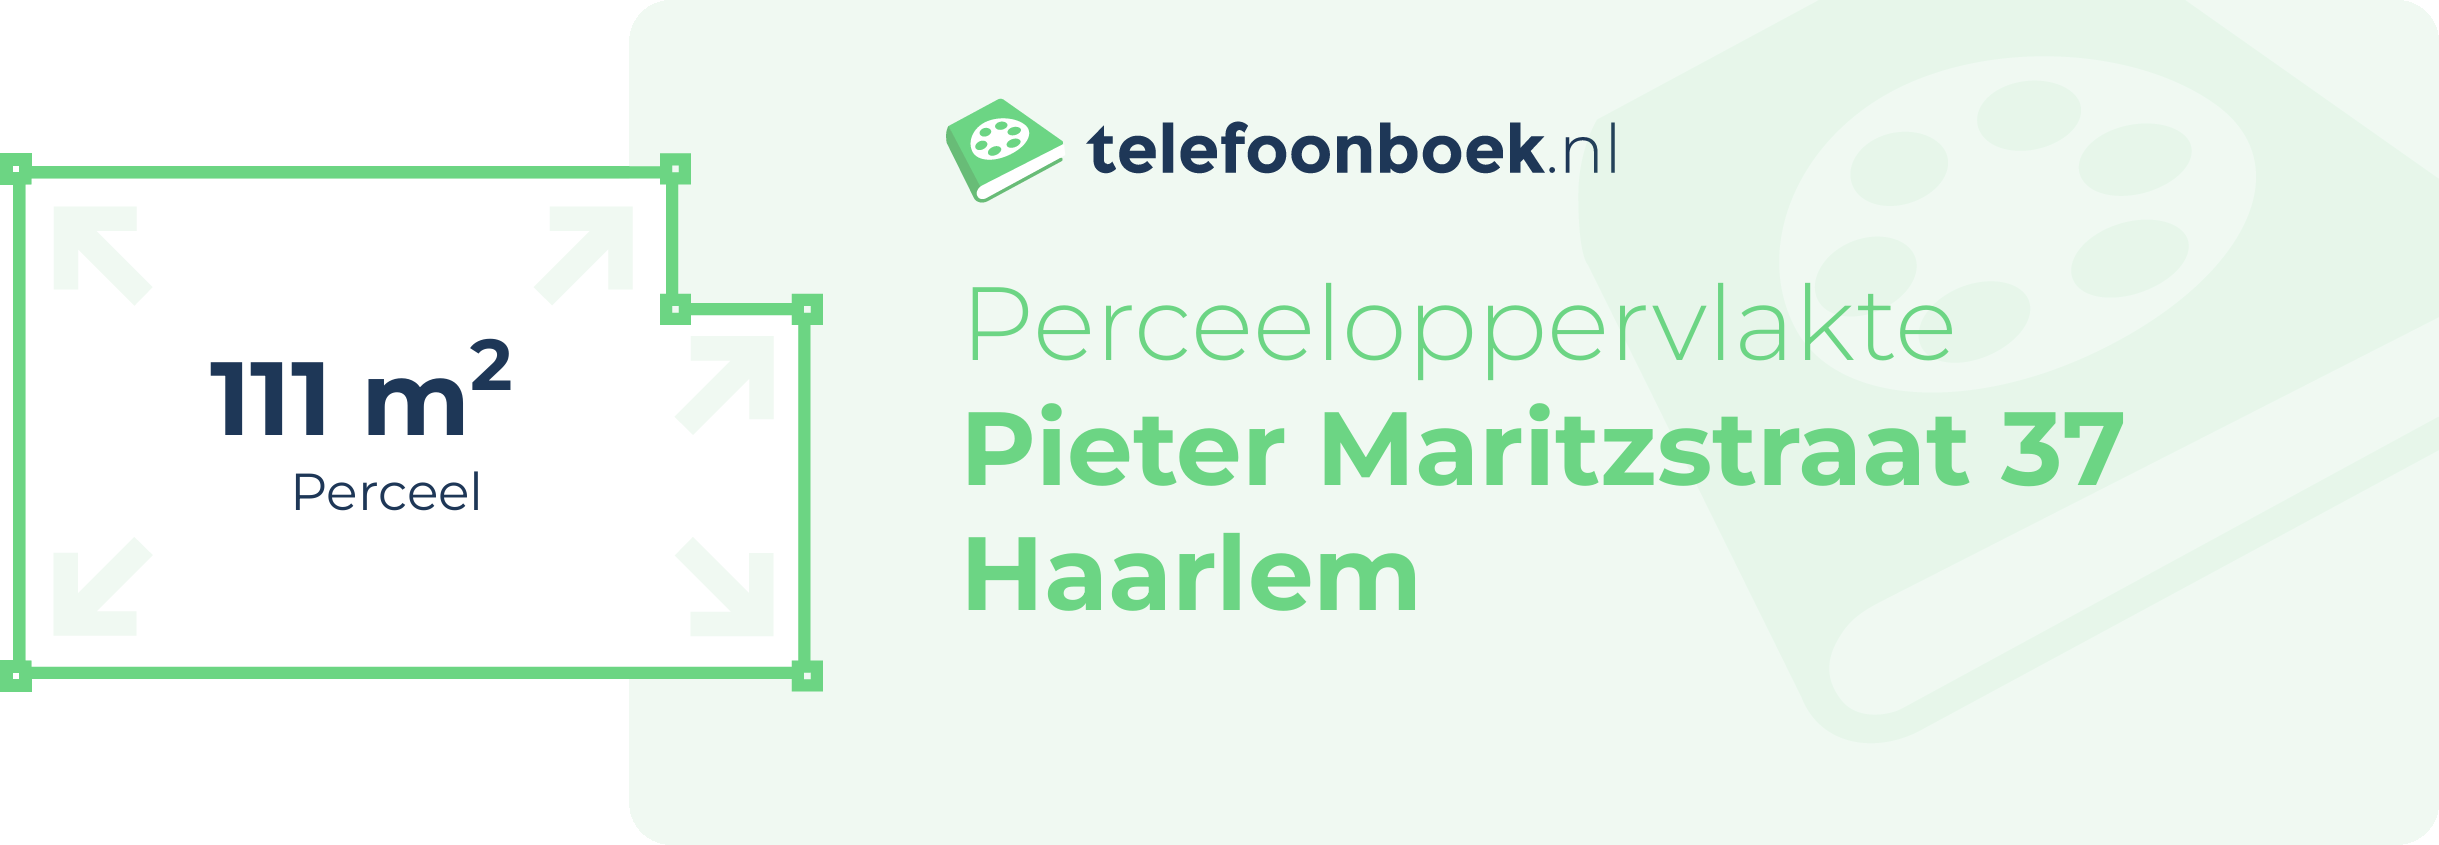 Perceeloppervlakte Pieter Maritzstraat 37 Haarlem